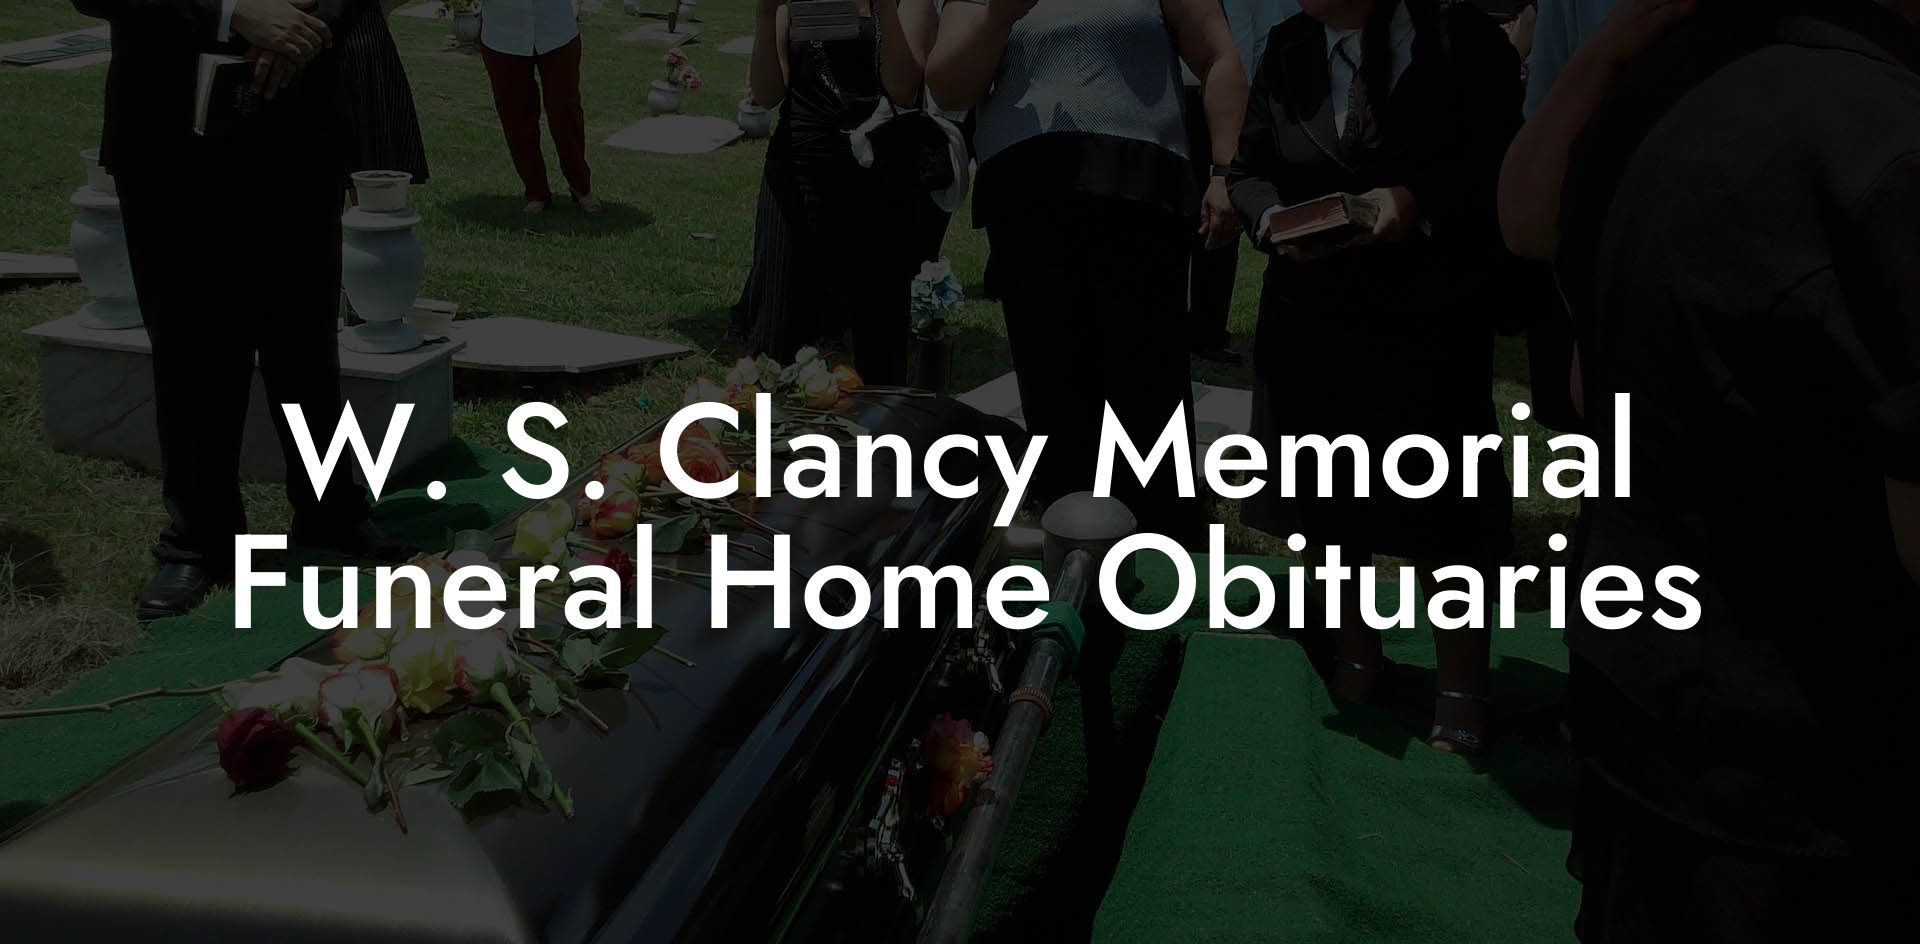 W. S. Clancy Memorial Funeral Home Obituaries